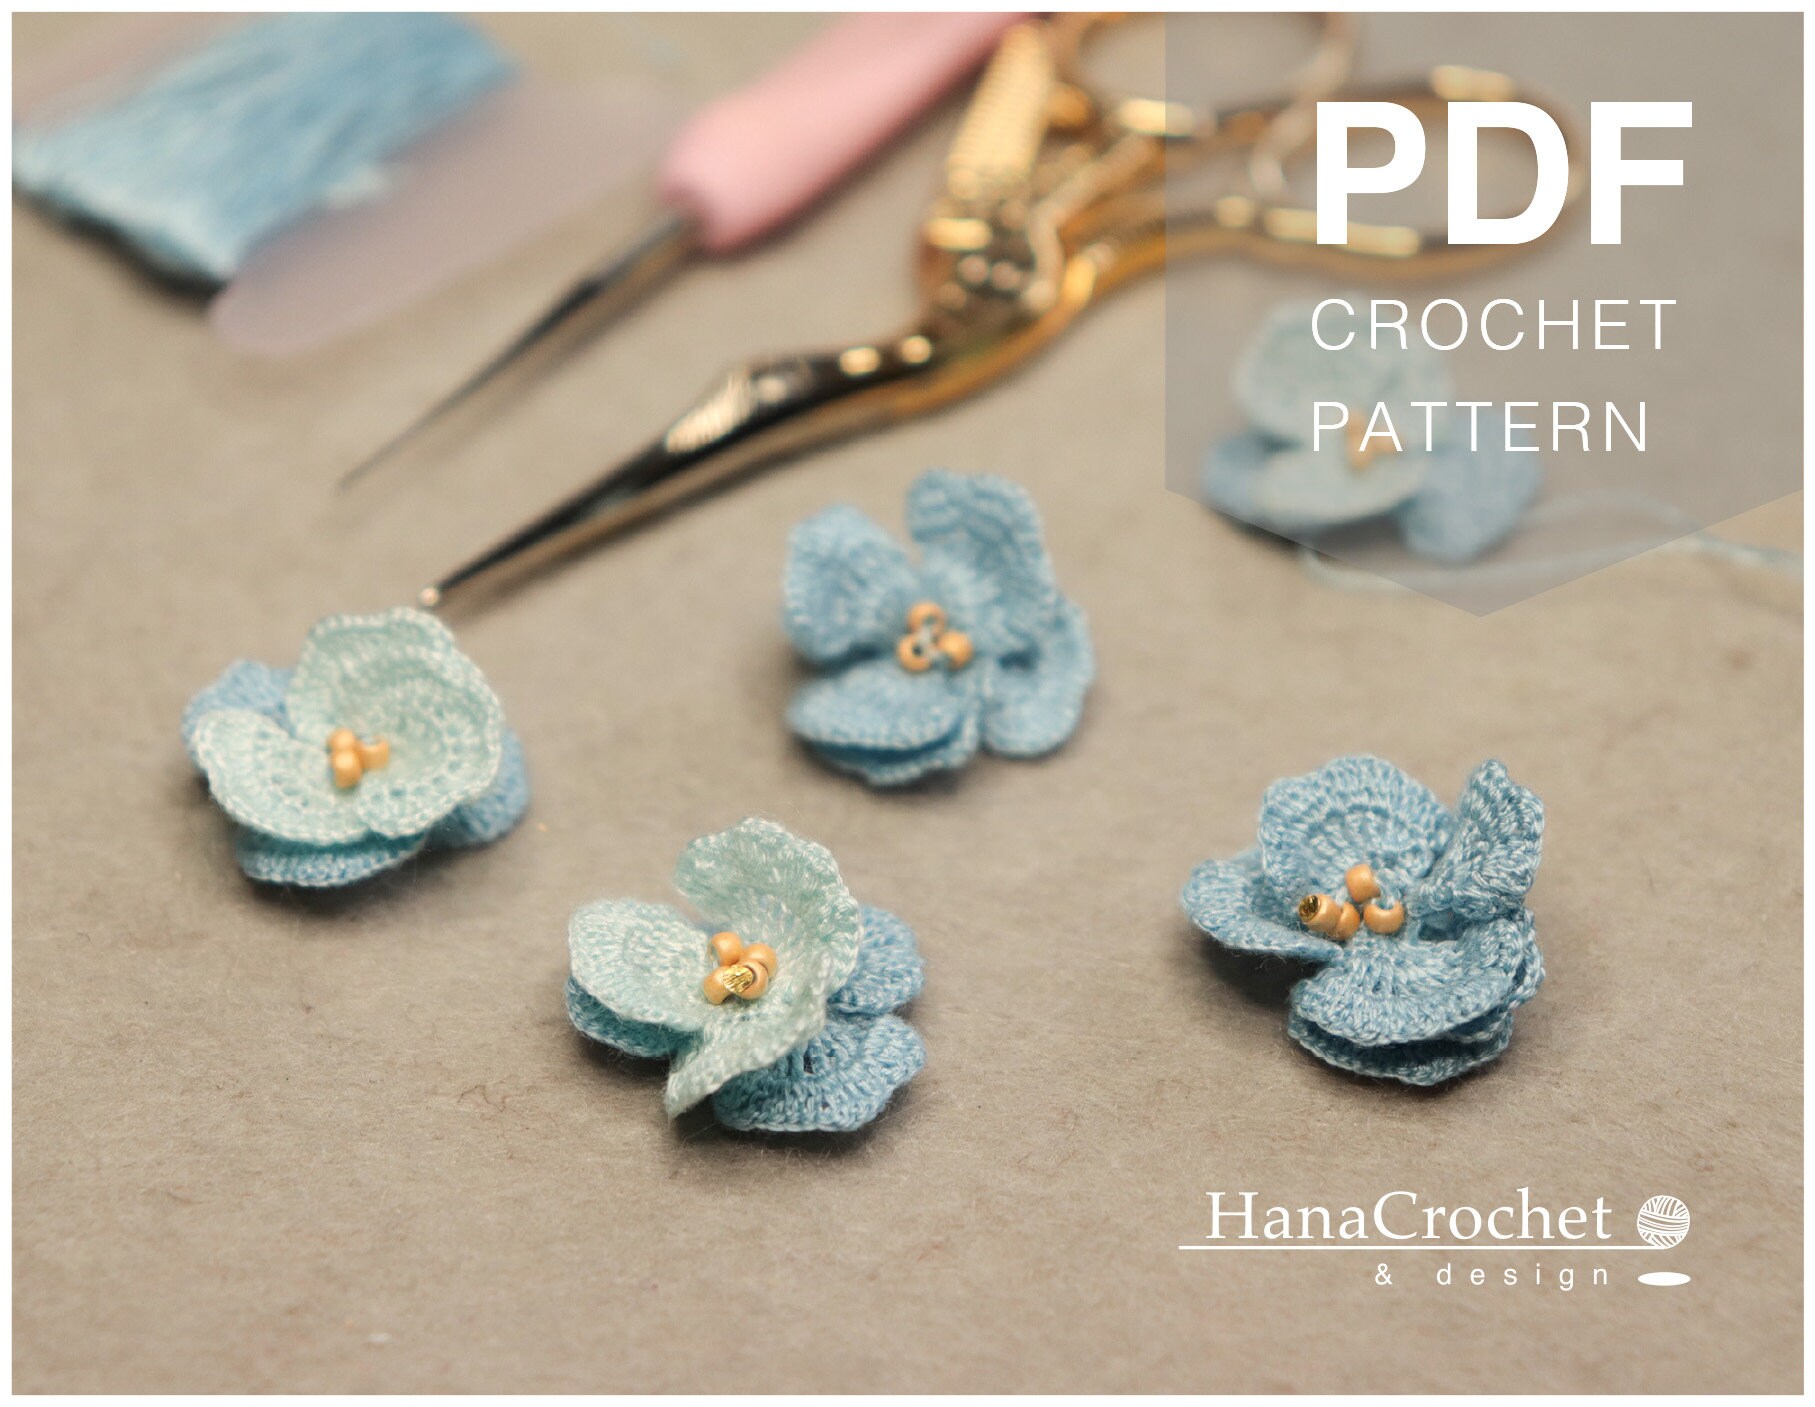 Crochet pattern flower choker PDF digital instant download, - Inspire Uplift